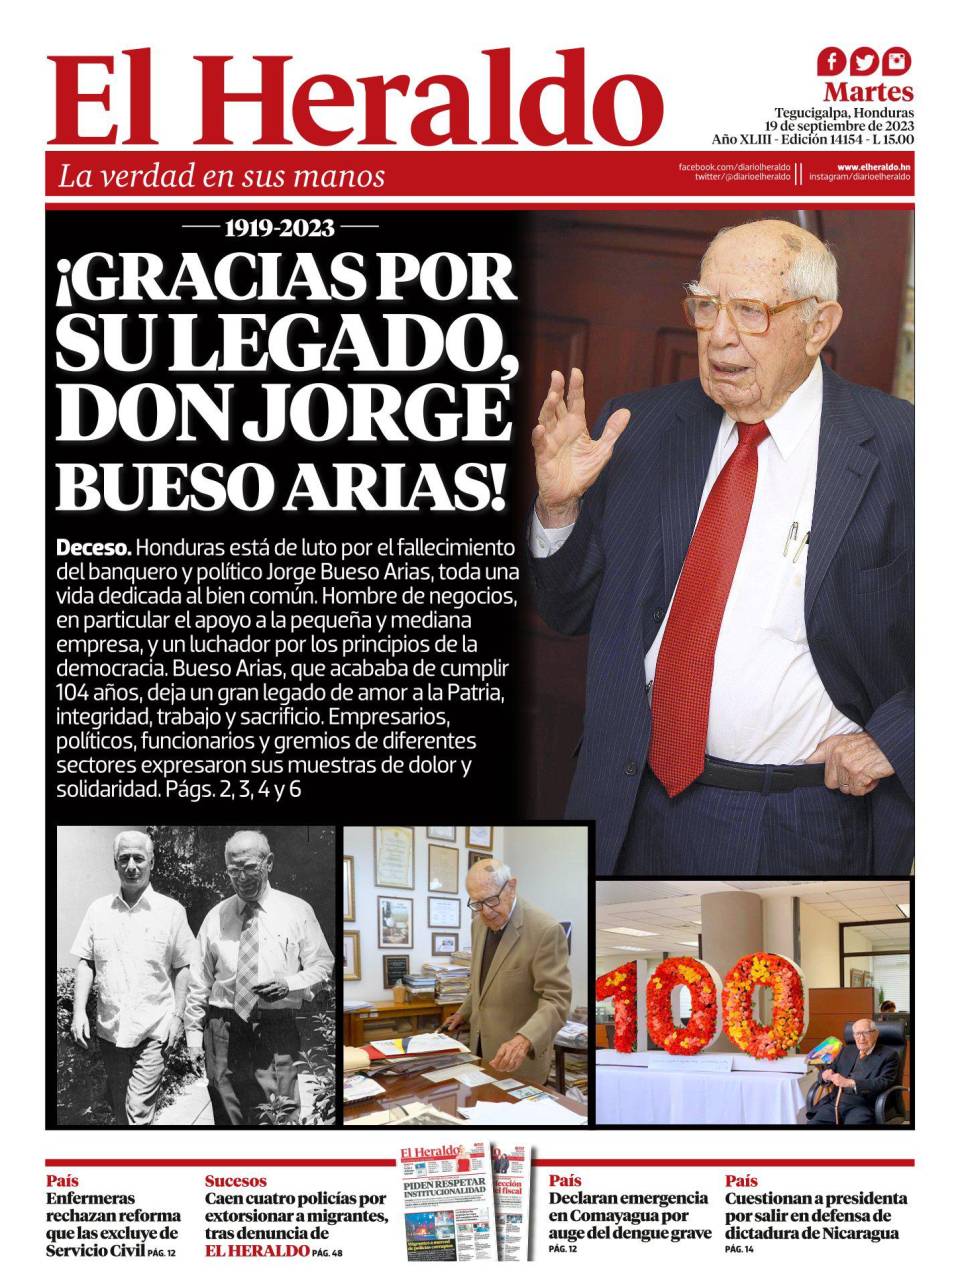 ¡Gracias por su legado don Jorge Bueso Arias!